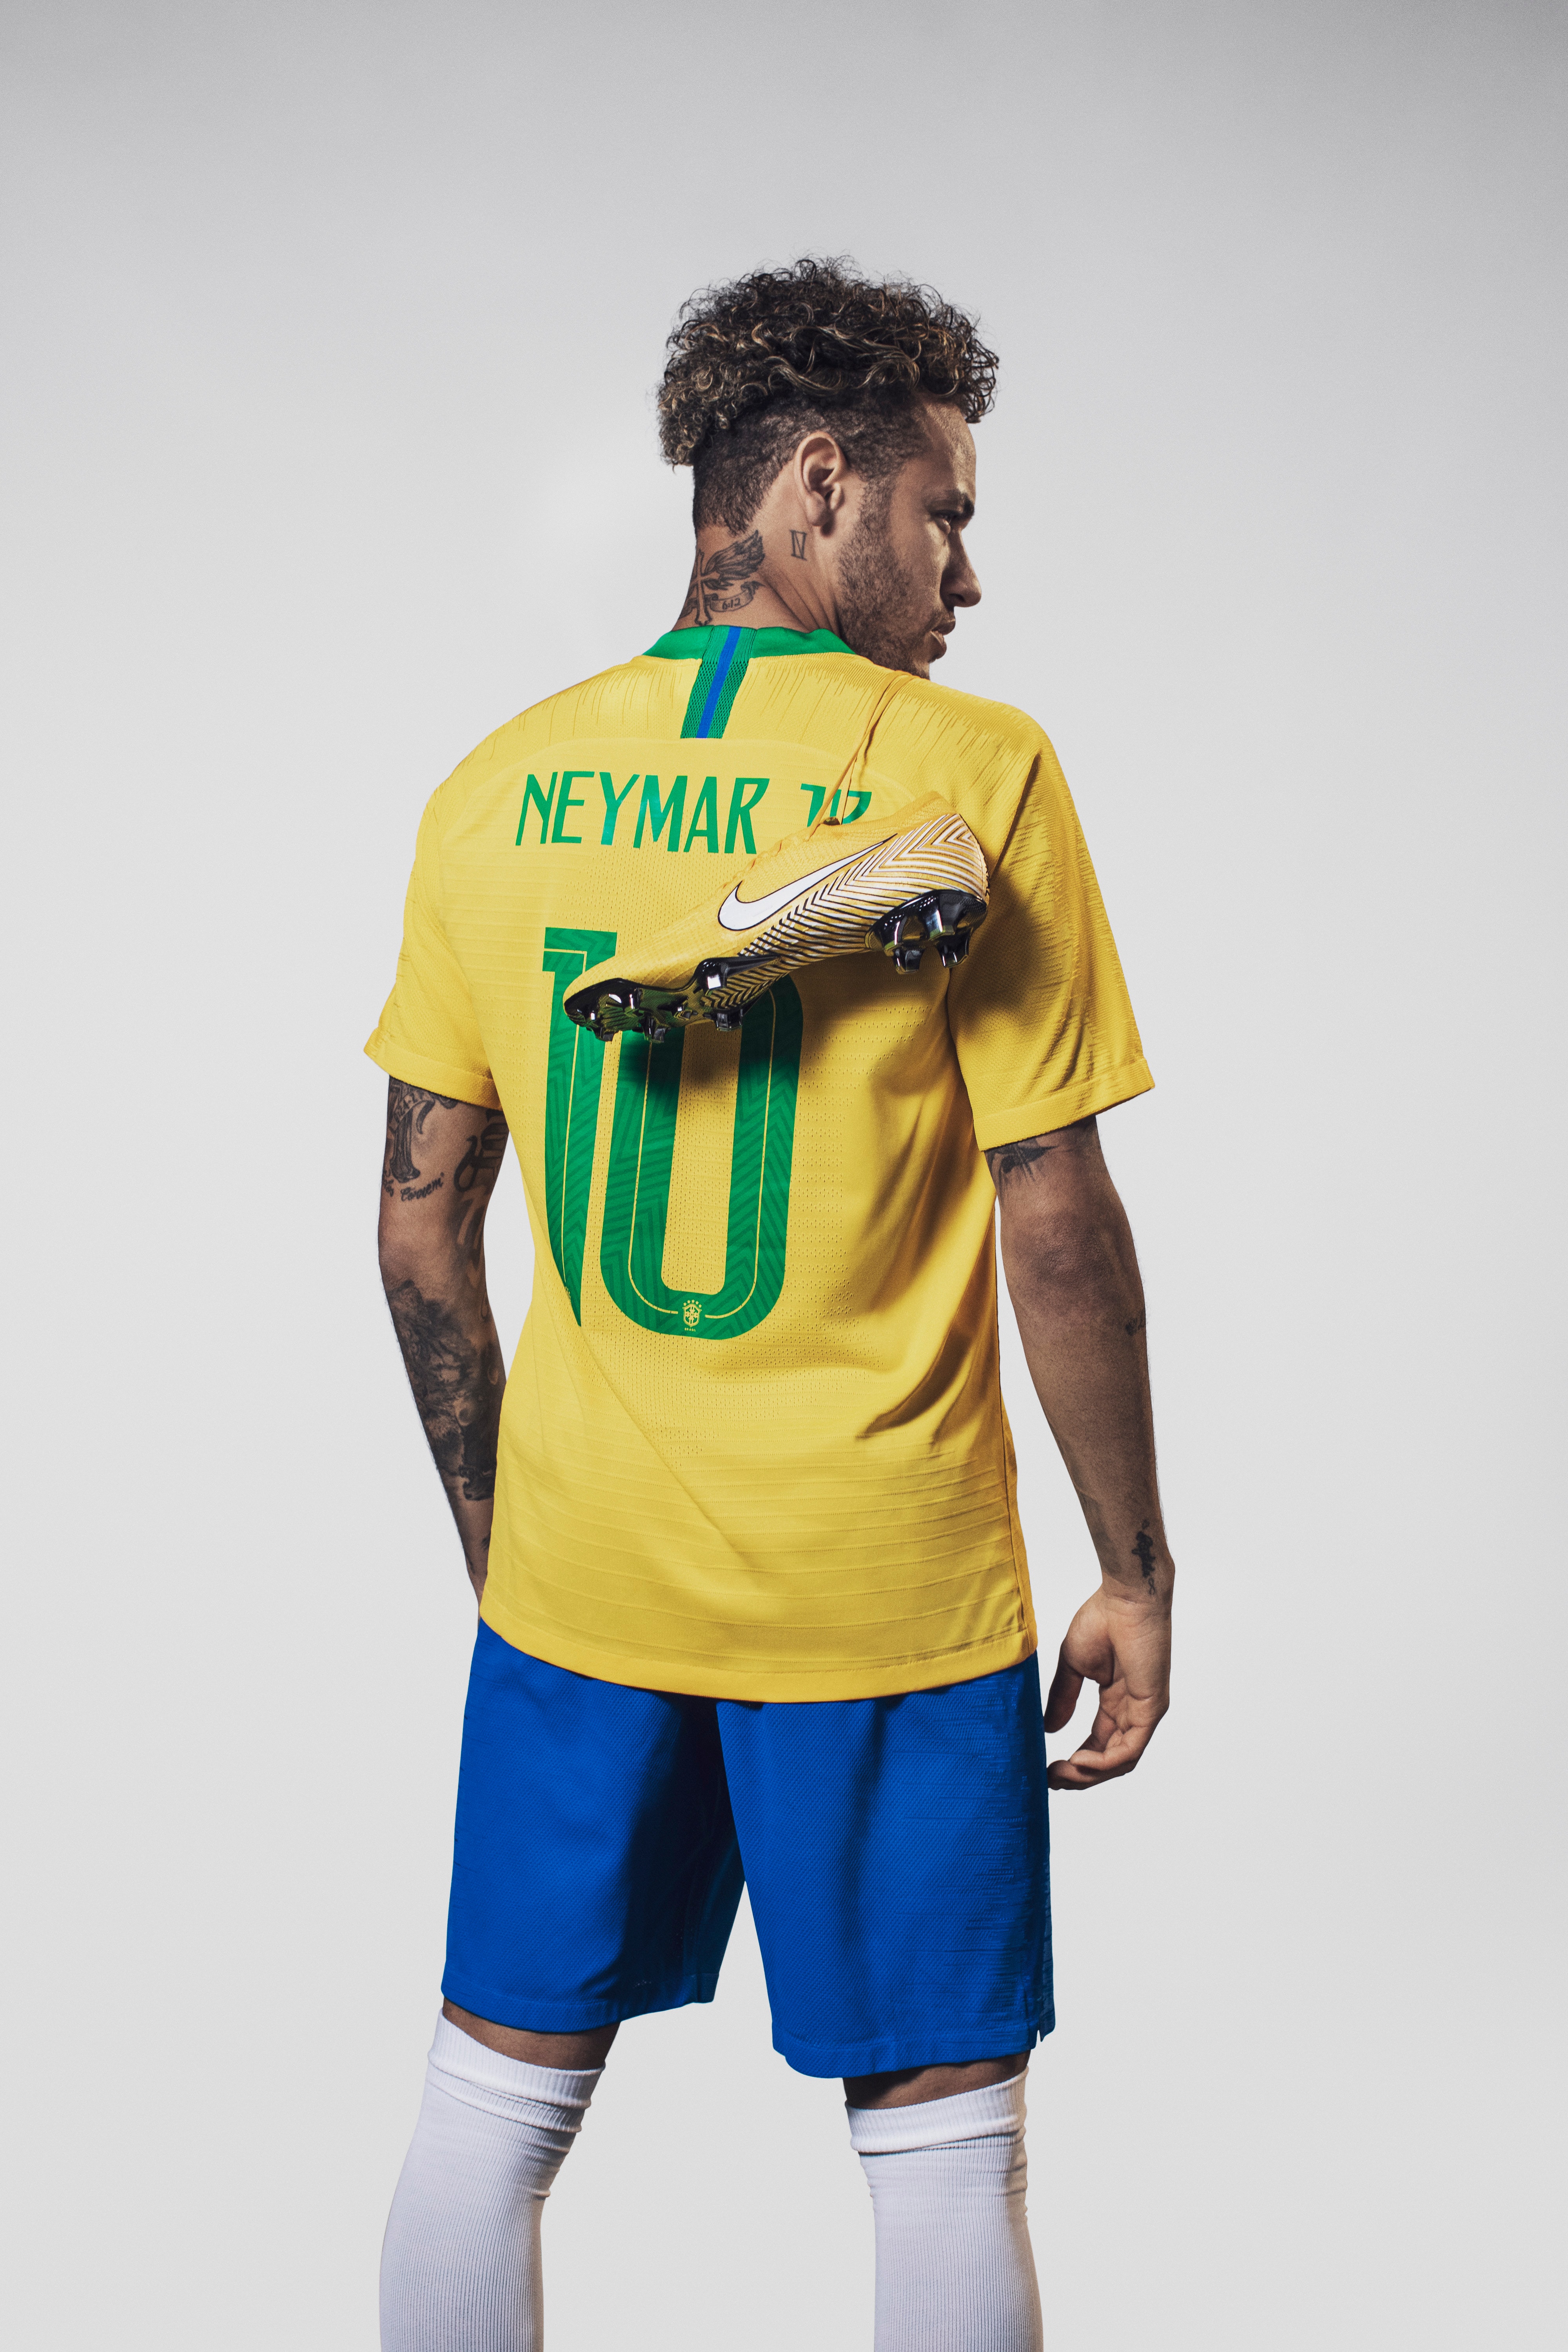 Photo De Neymar Jr. Avec Ses Nike Mercurial Vapor 360